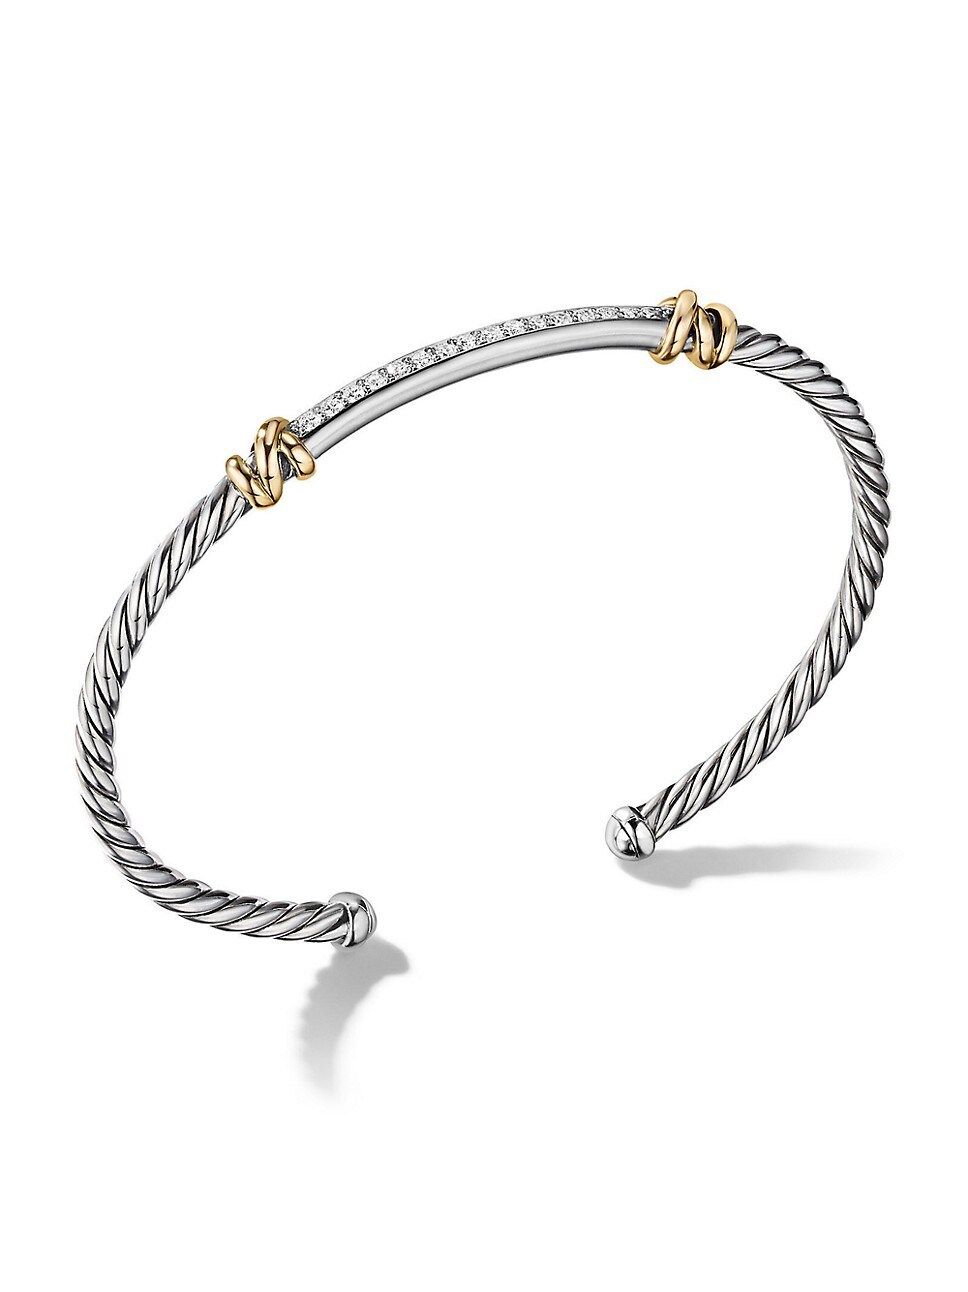 Petite Helena Two Station Wrap Bracelet with 18K Yellow Gold with Pavé Diamonds | Saks Fifth Avenue